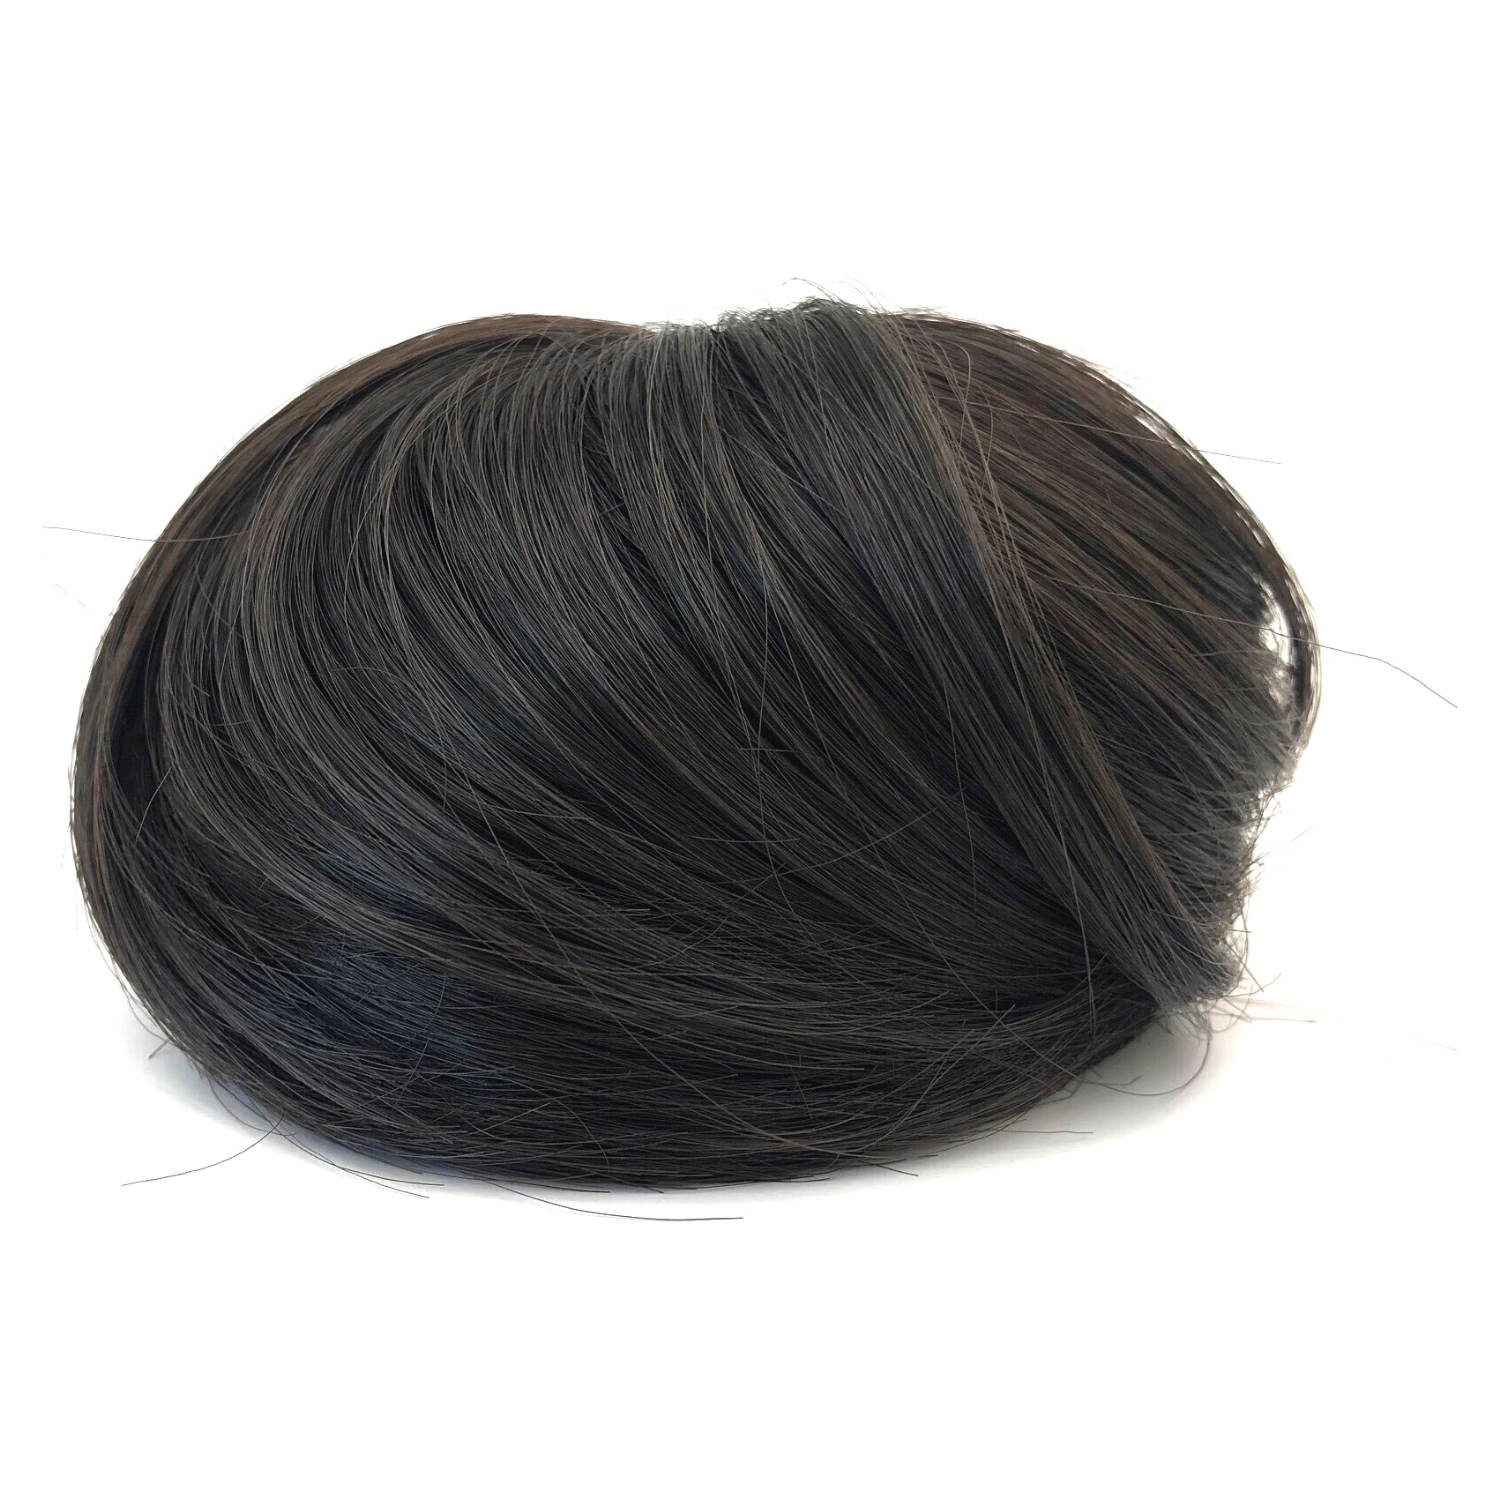 image of hair rehab london clip on bun hairpiece in shade midnight